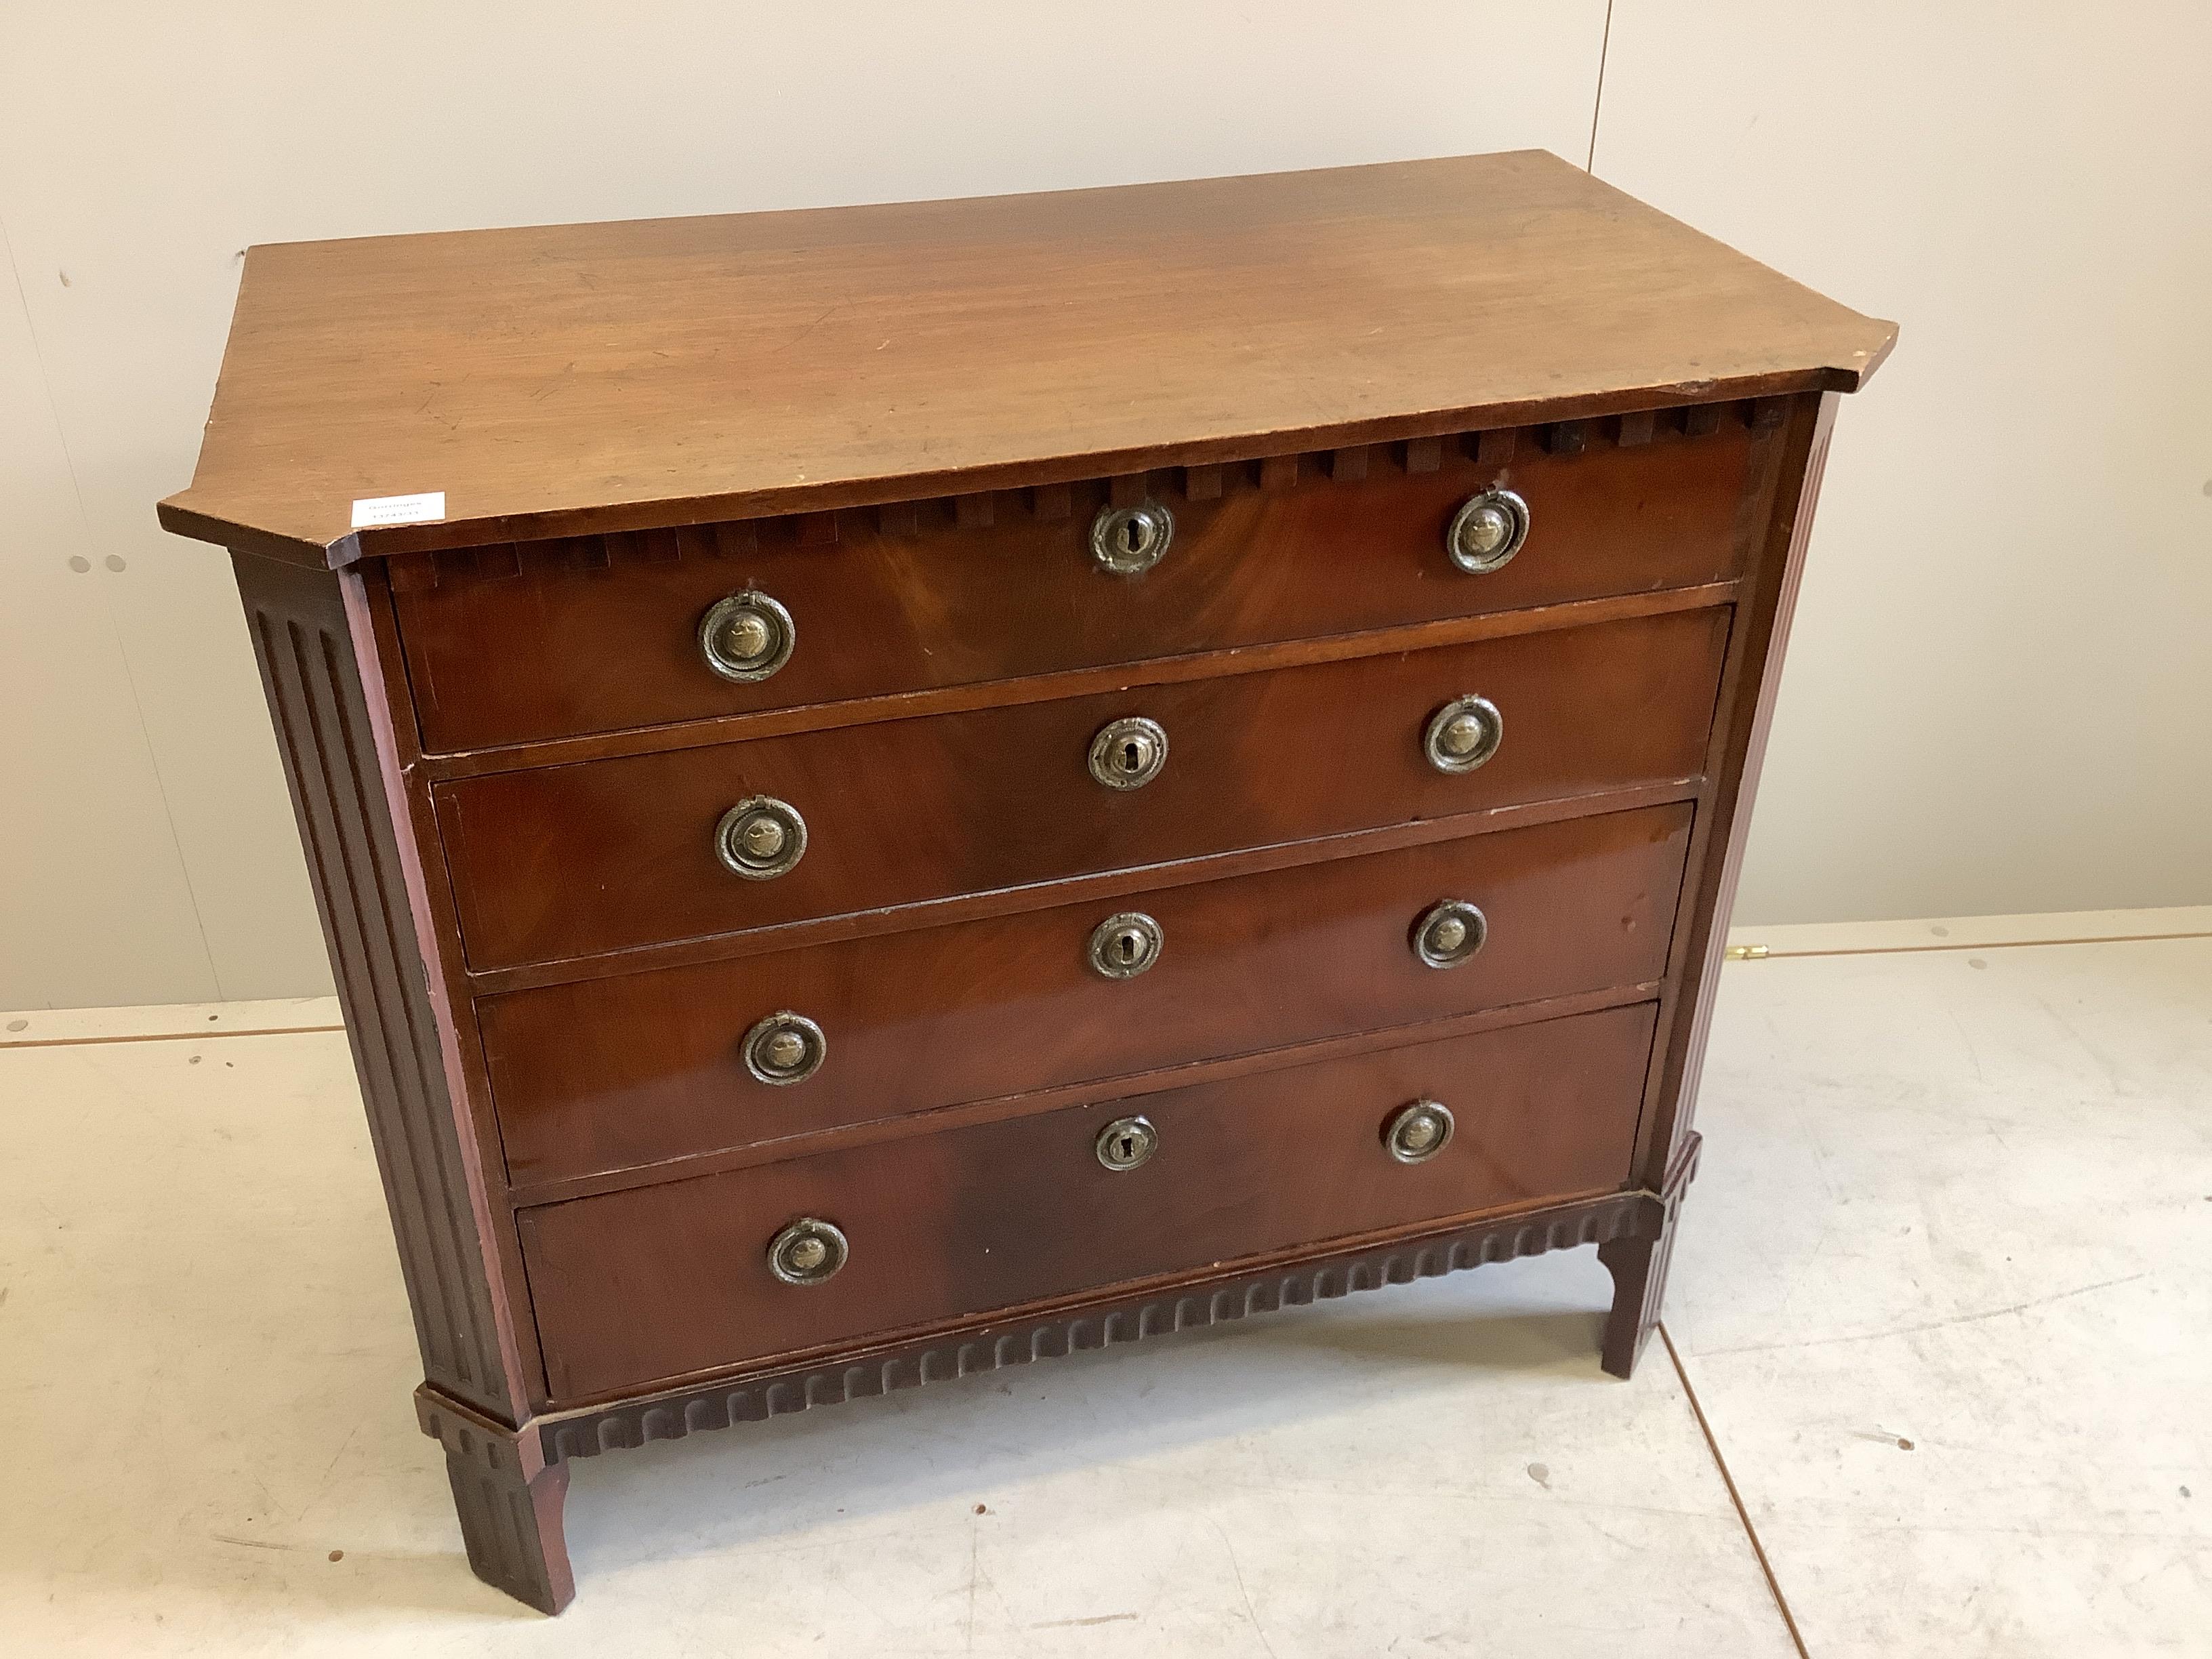 A 19th century Dutch mahogany four drawer chest, width 92cm, depth 49cm, height 78cm